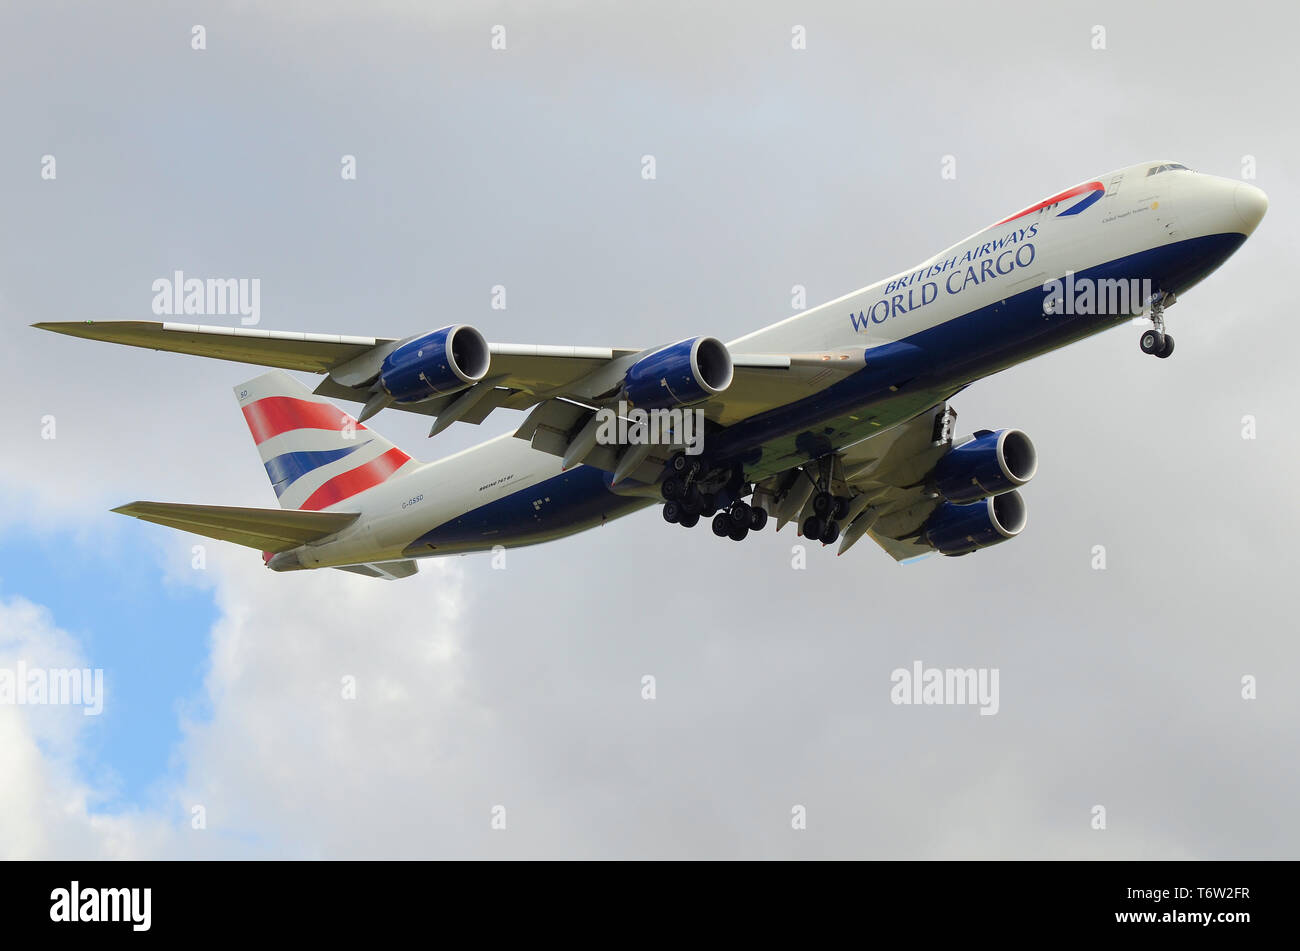 British Airways World Cargo Global Supply Systems Boeing 747 87UF aereo cargo jet. Jumbo Jet progettato per il trasporto merci. 787-8F. Volare Foto Stock